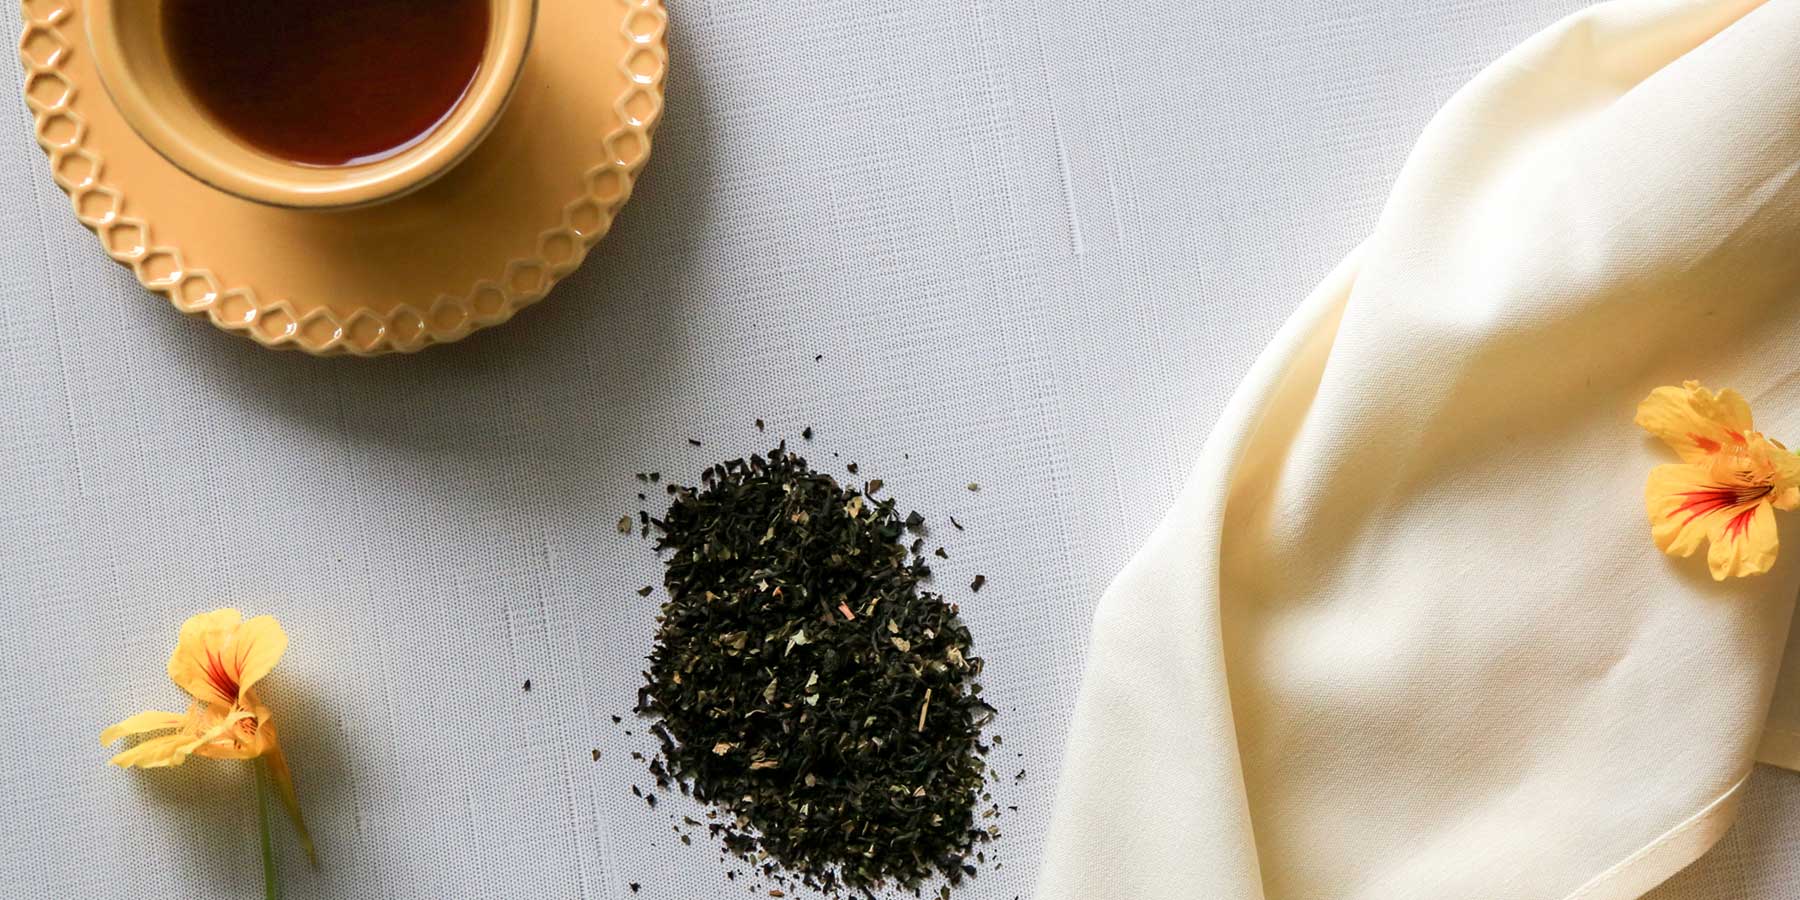 The Tea House on Los rios offers 56 flavors of Loose Leaf Tea